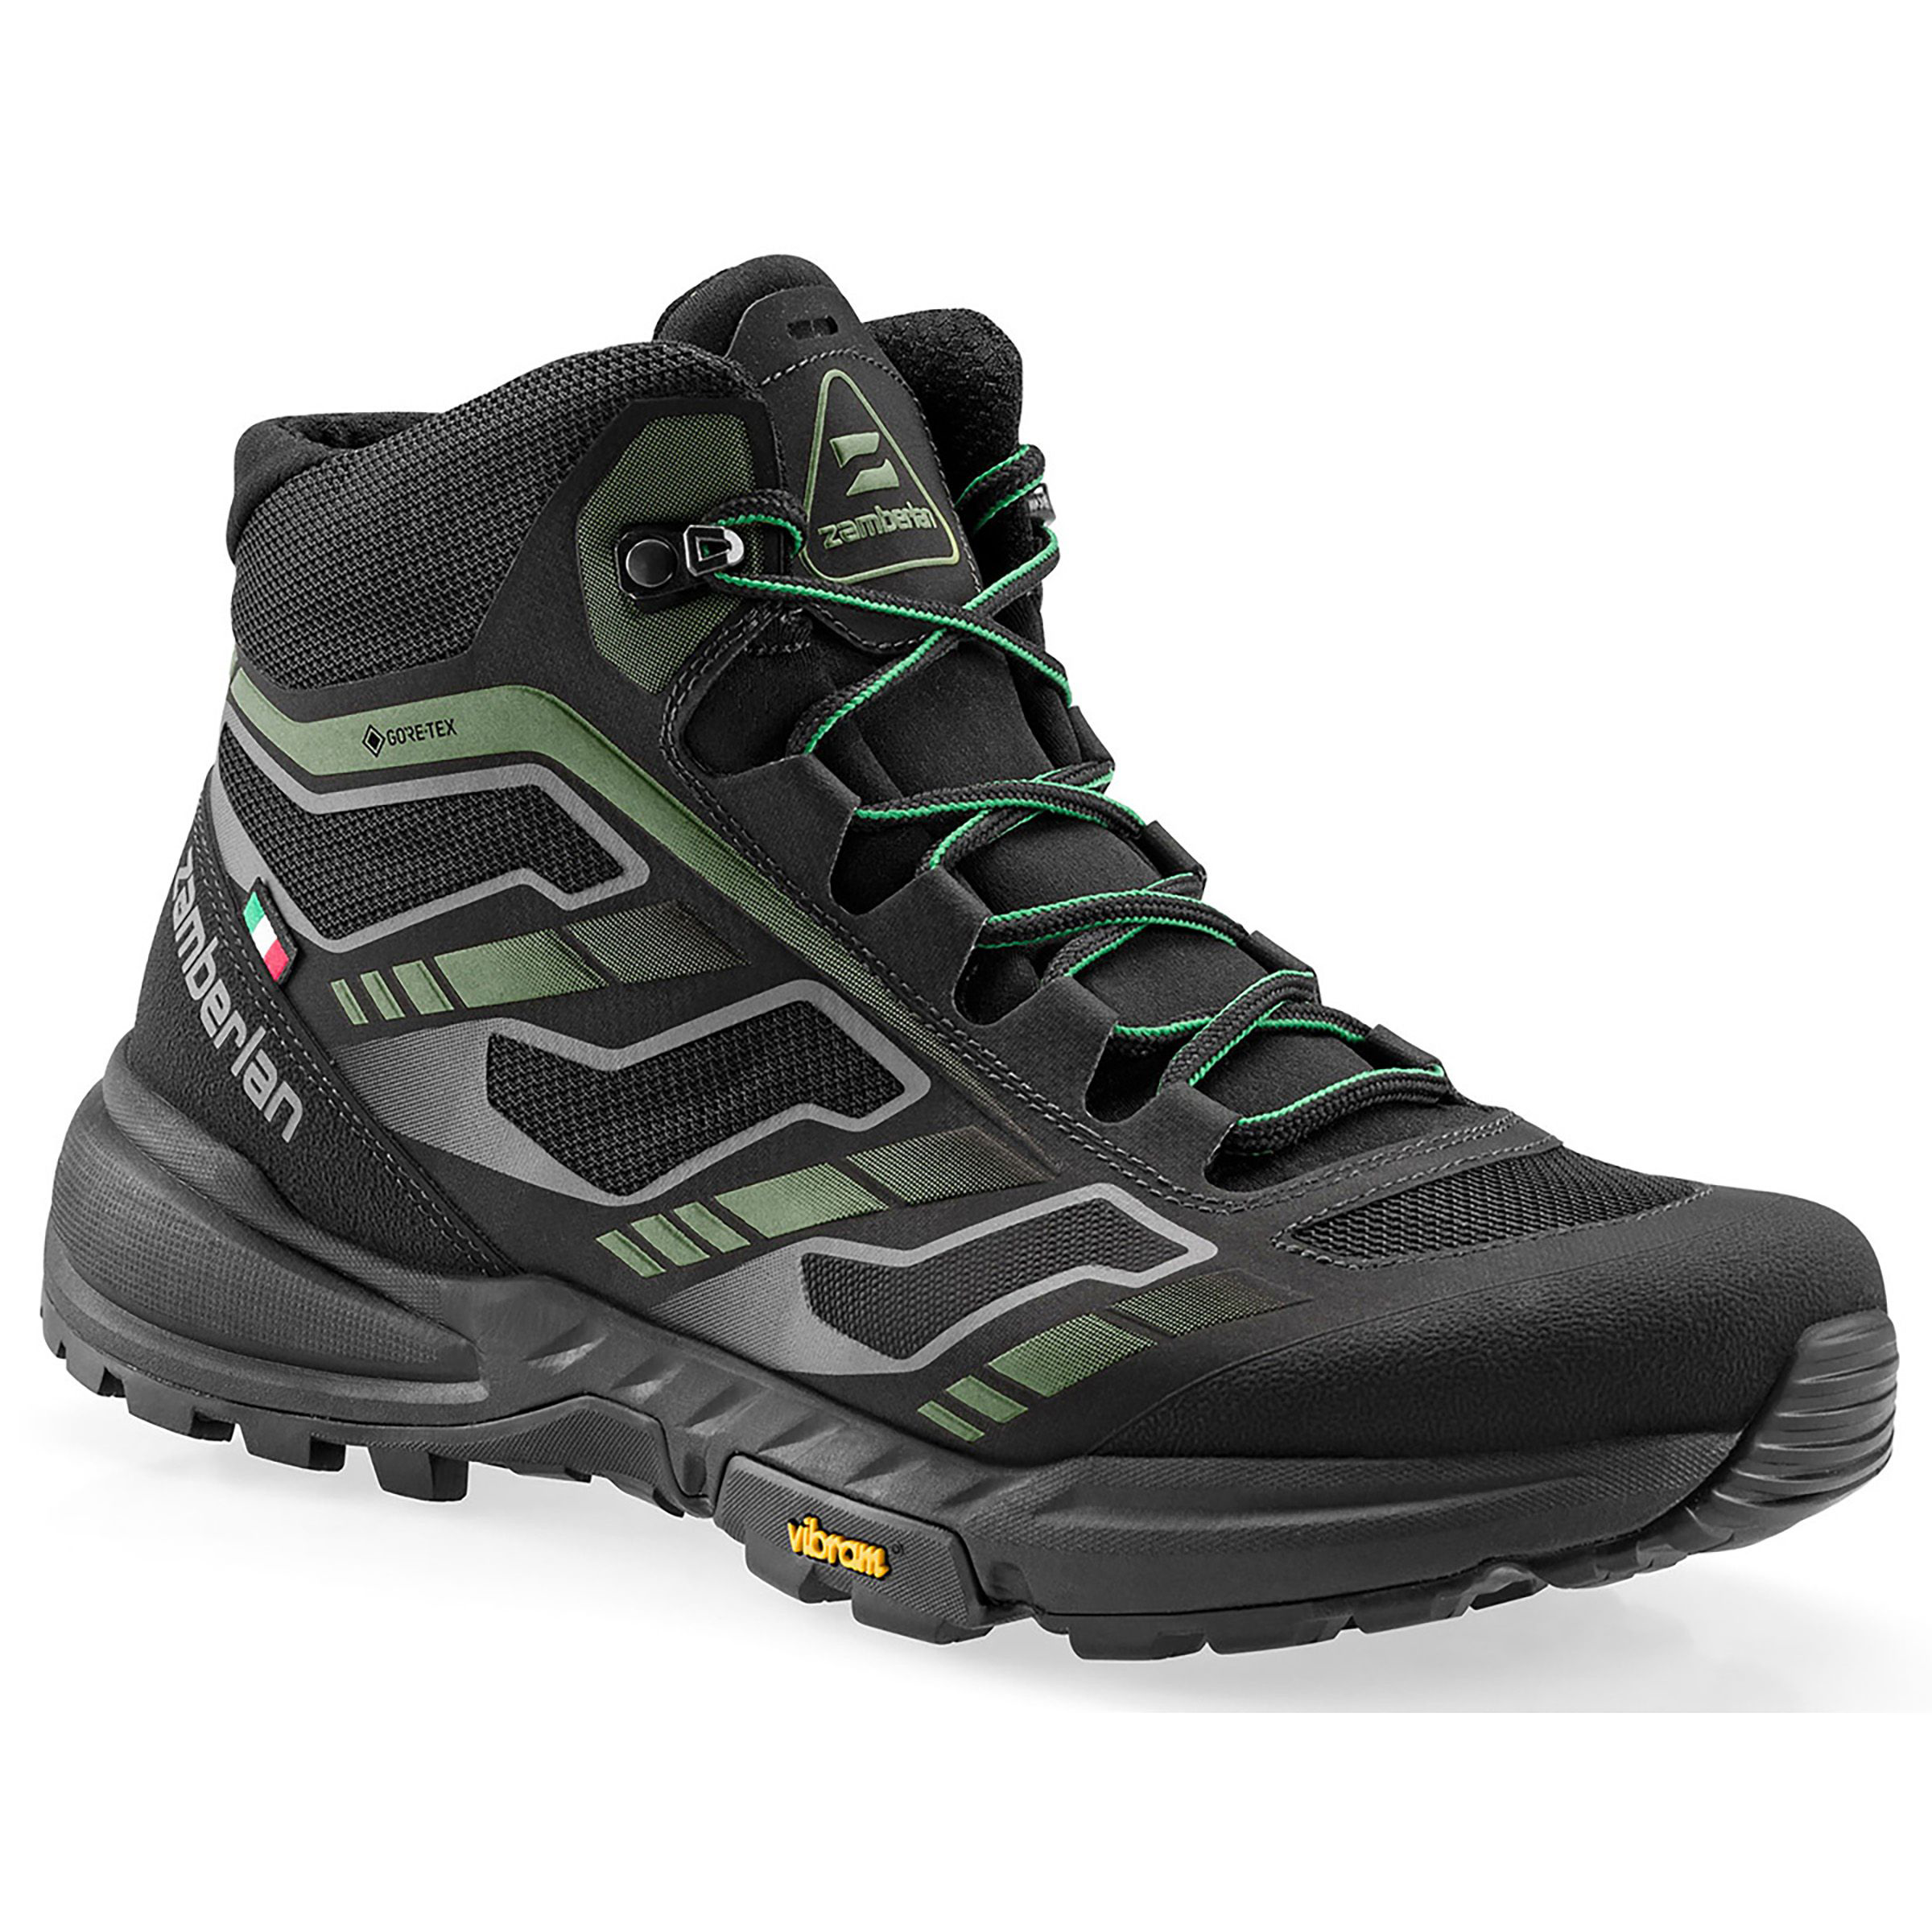 Zamberlan 219 Anabasis GTX Waterproof Mid Hiking Boots for Men - Dark Green - 8M